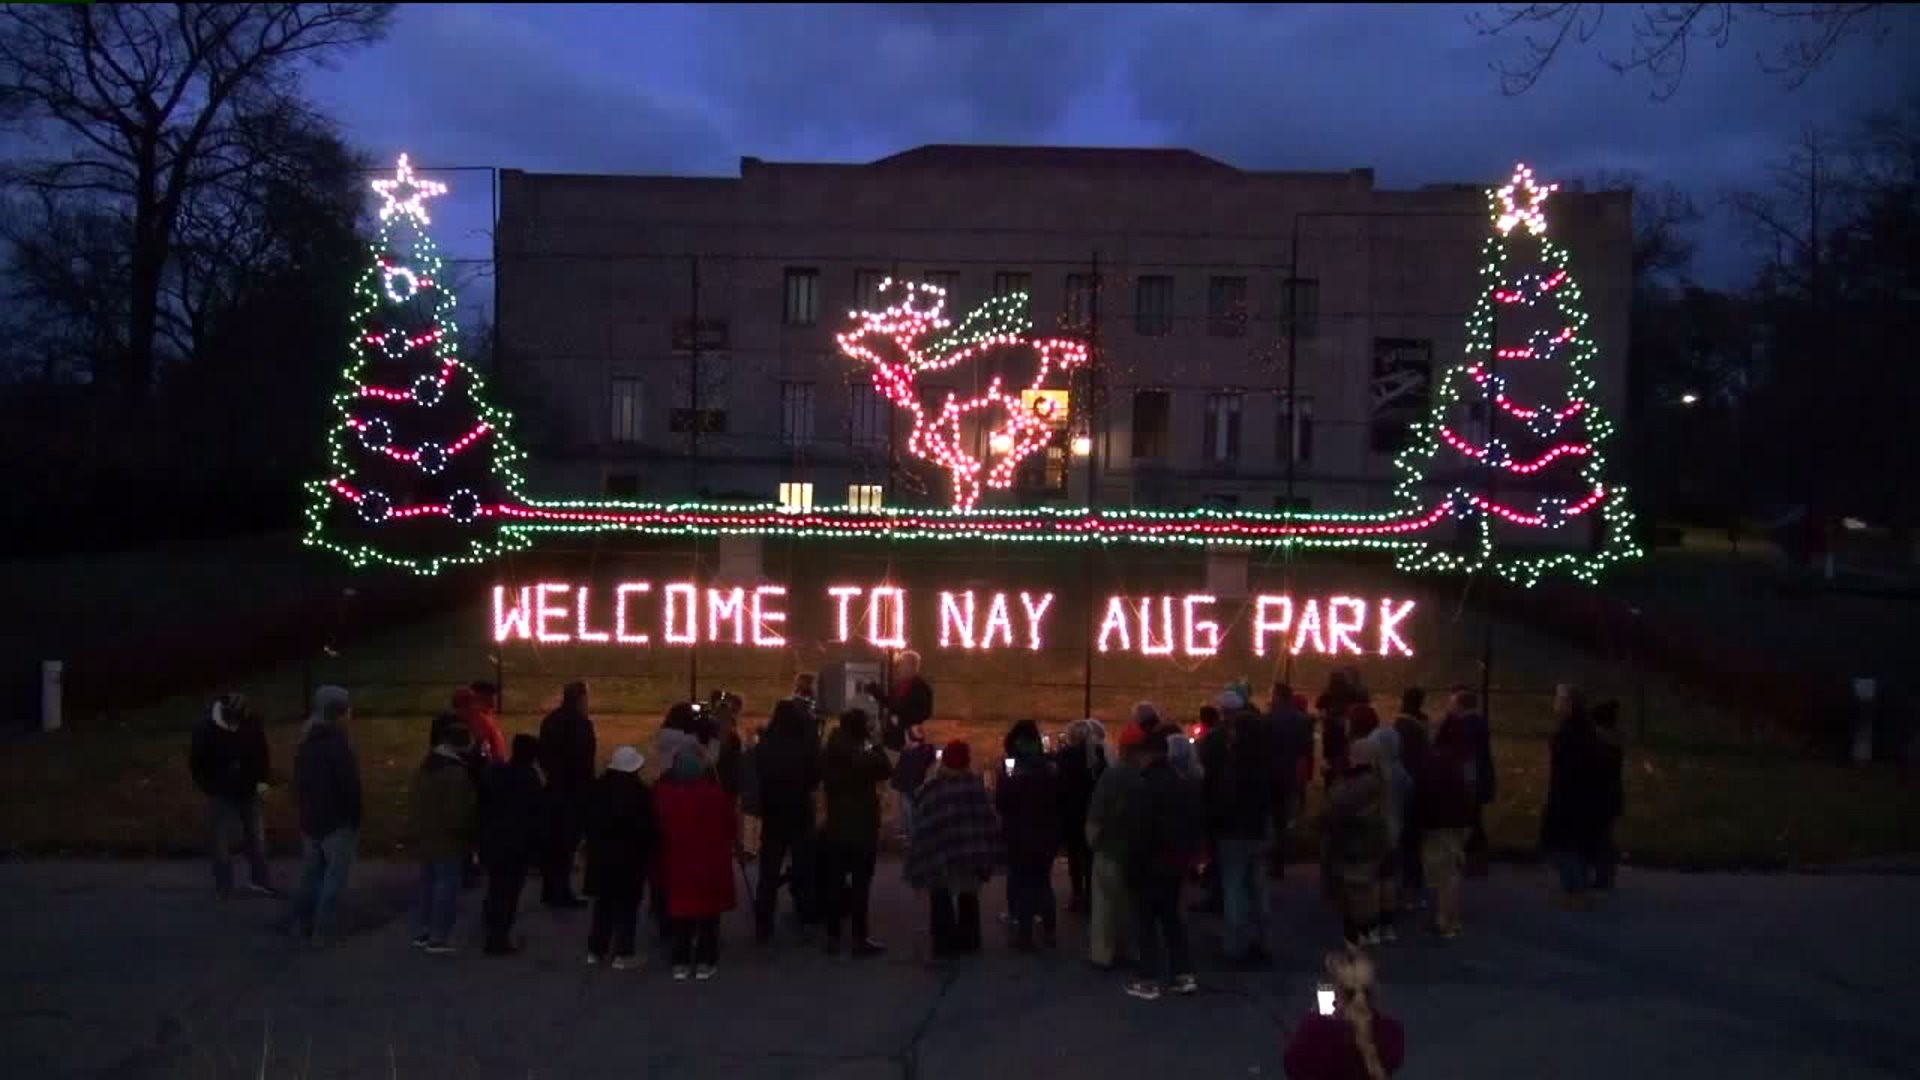 Lights Turned On at Nay Aug Park Holiday Display